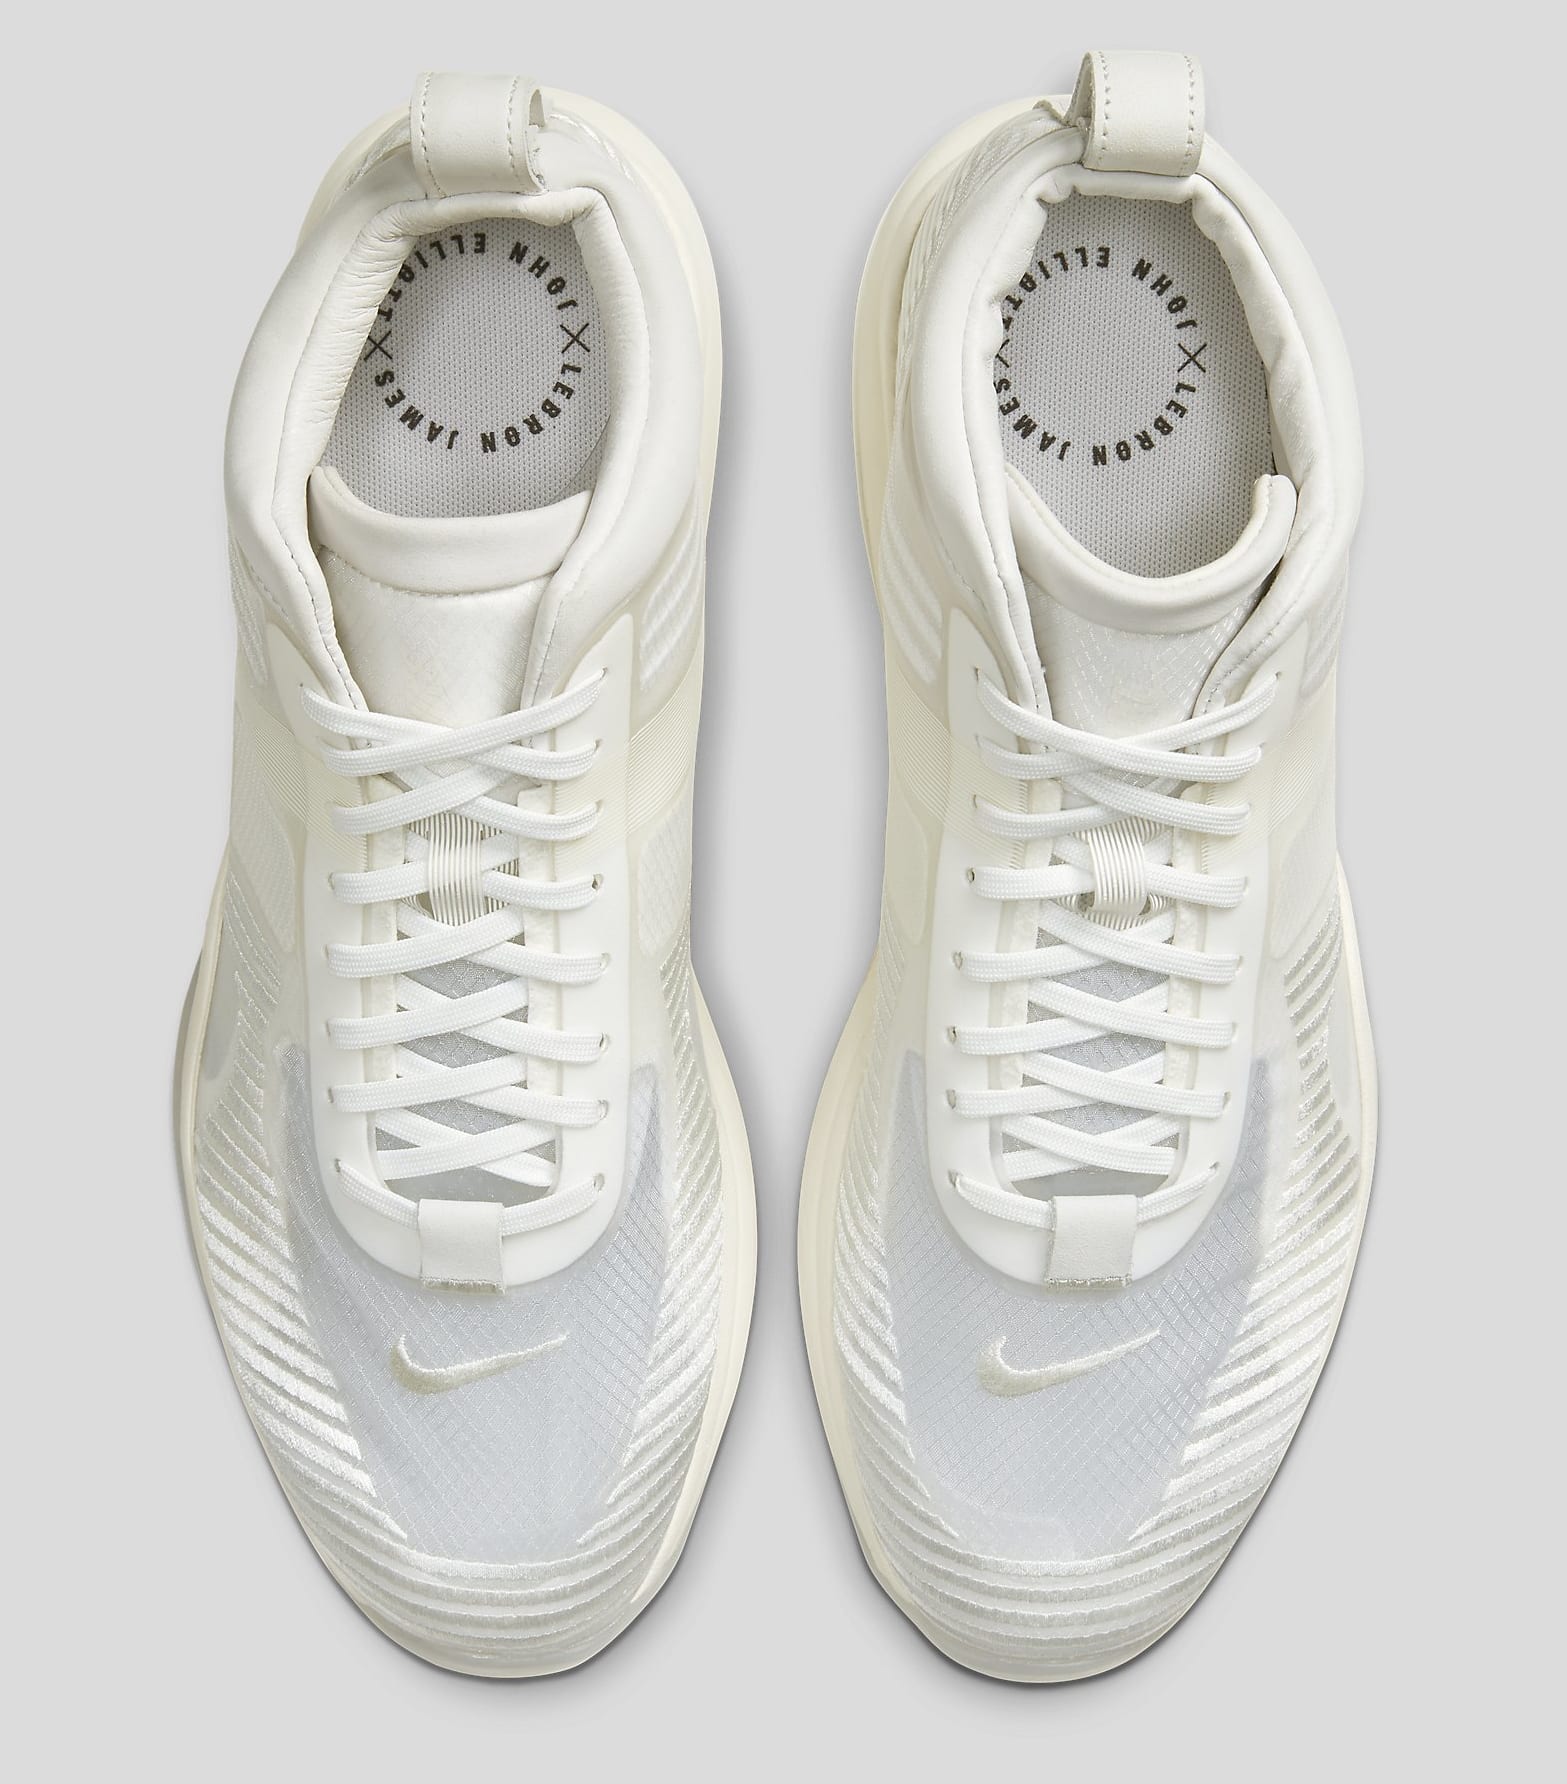 Best Look Yet at the White John Elliott x Nike LeBron Icon | Complex